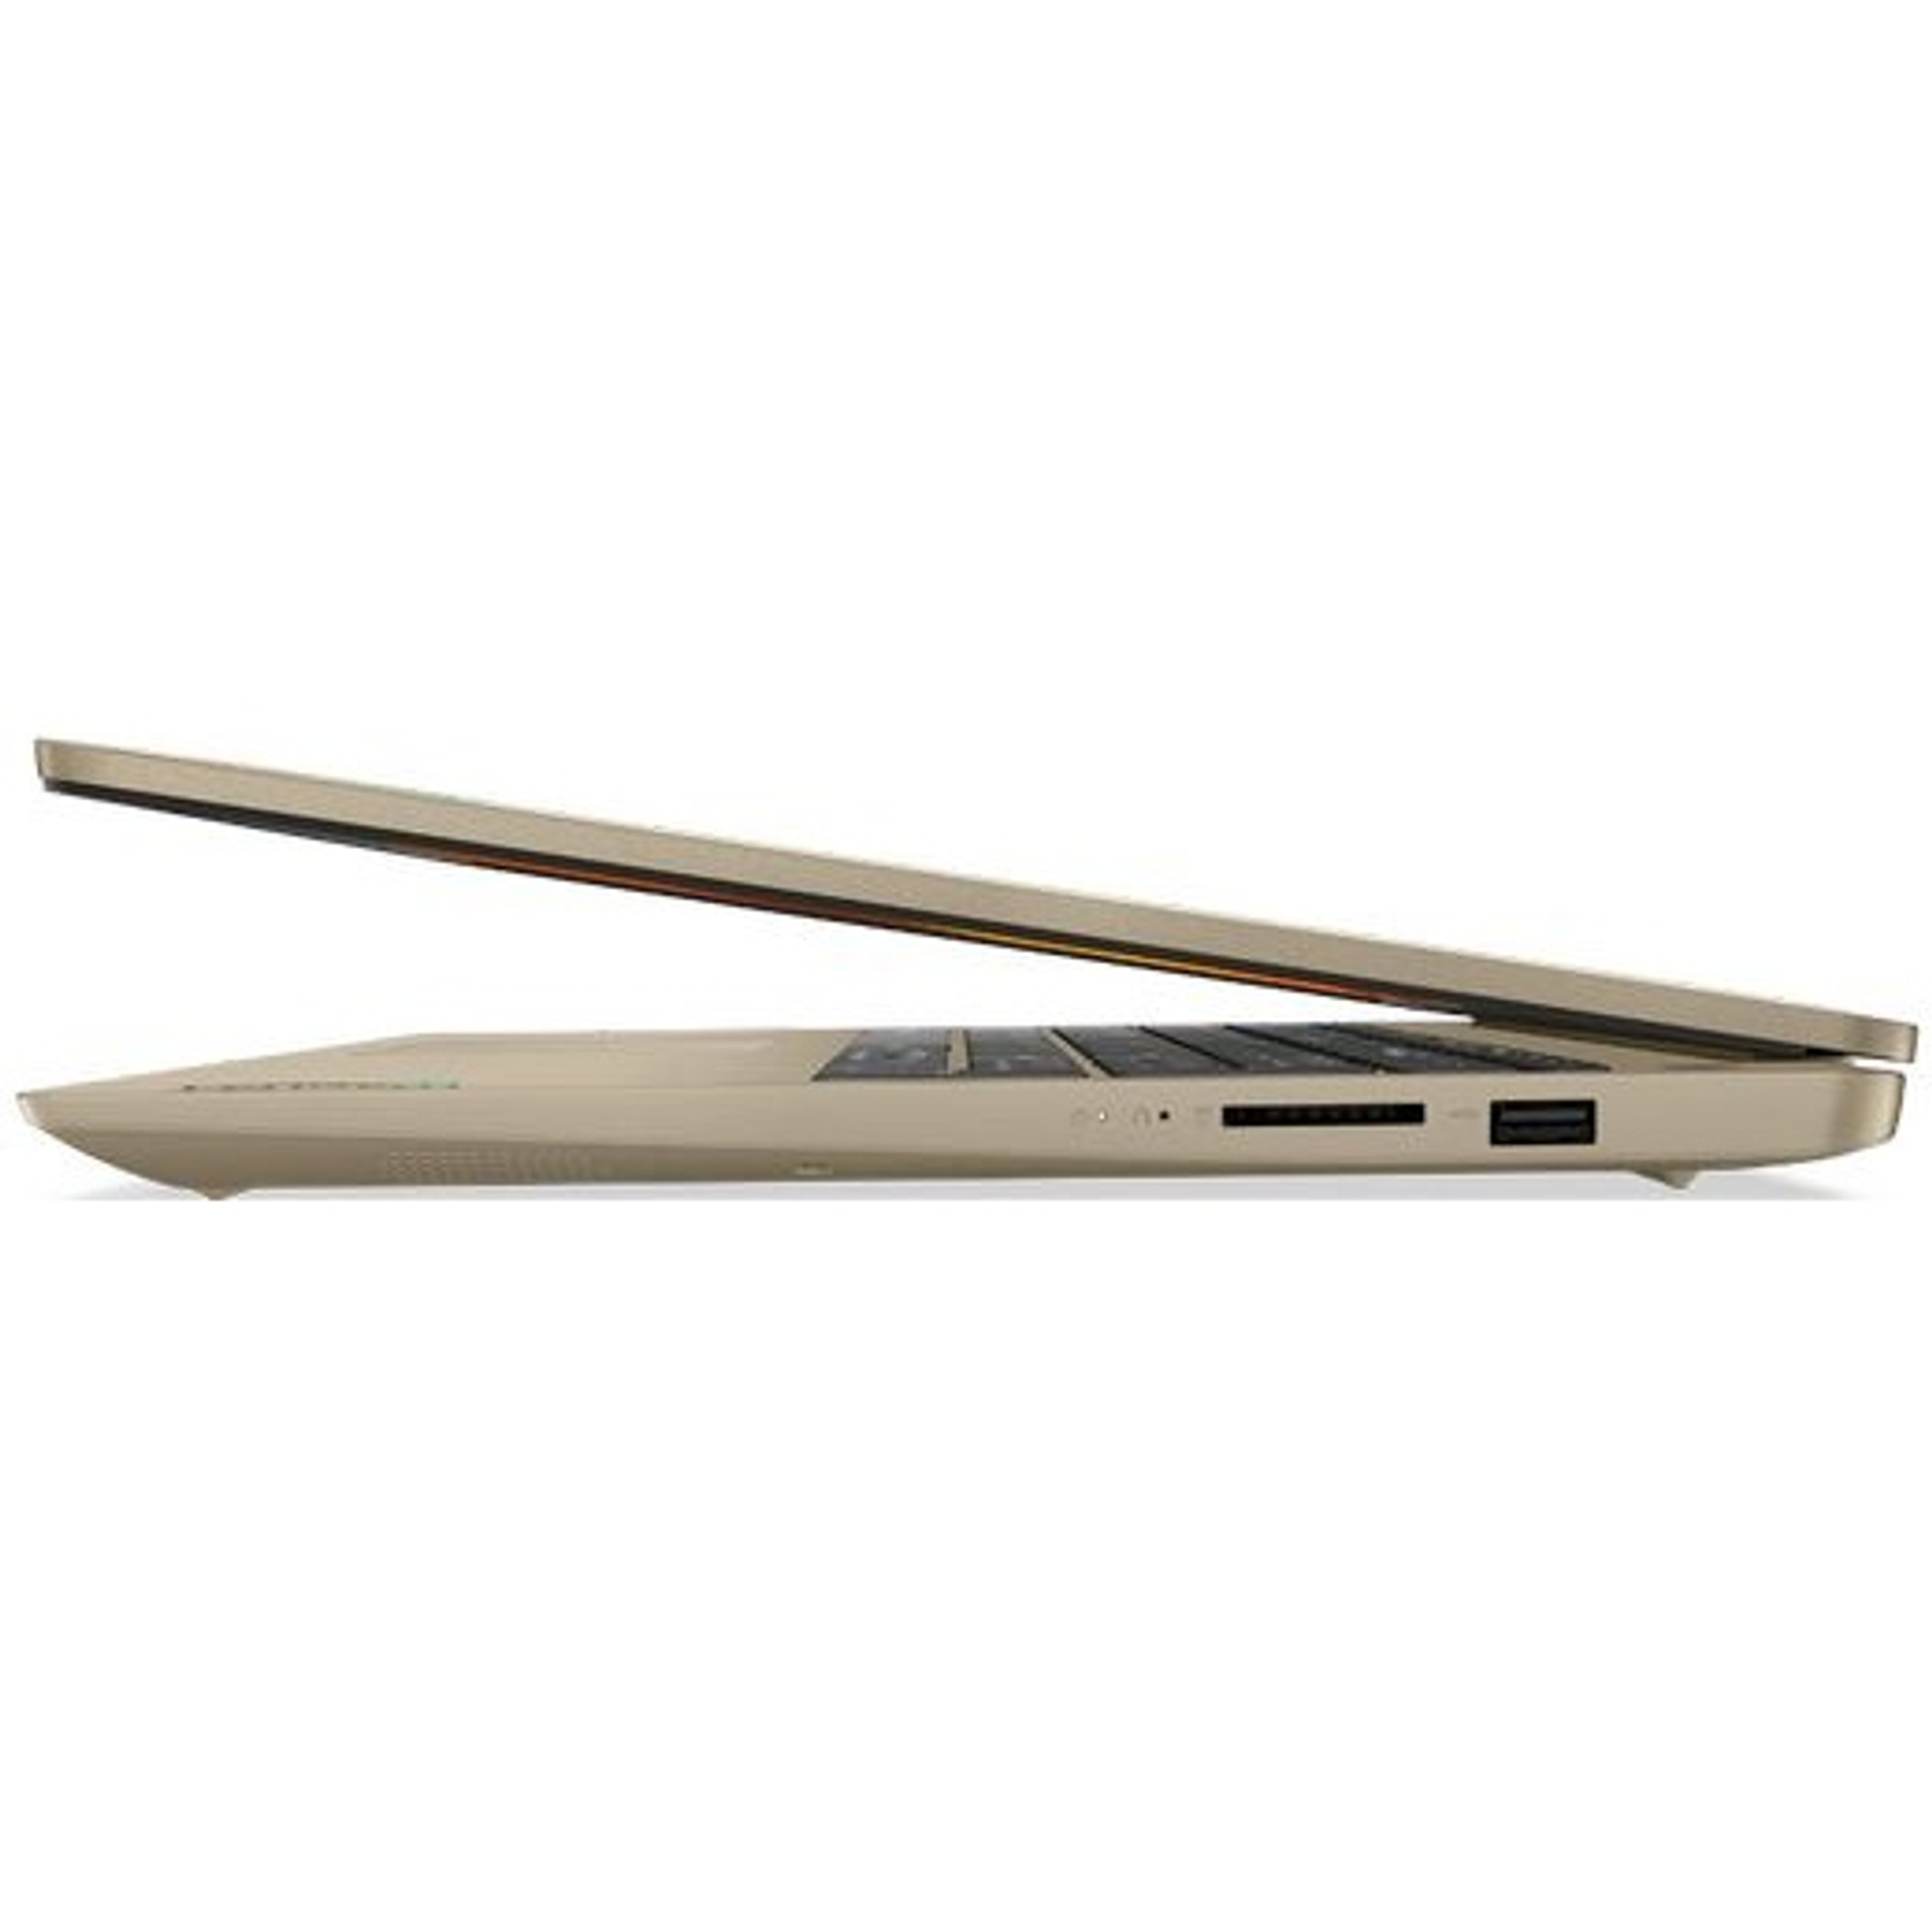 LENOVO 82H8025PHV Laptop / Notebook 3